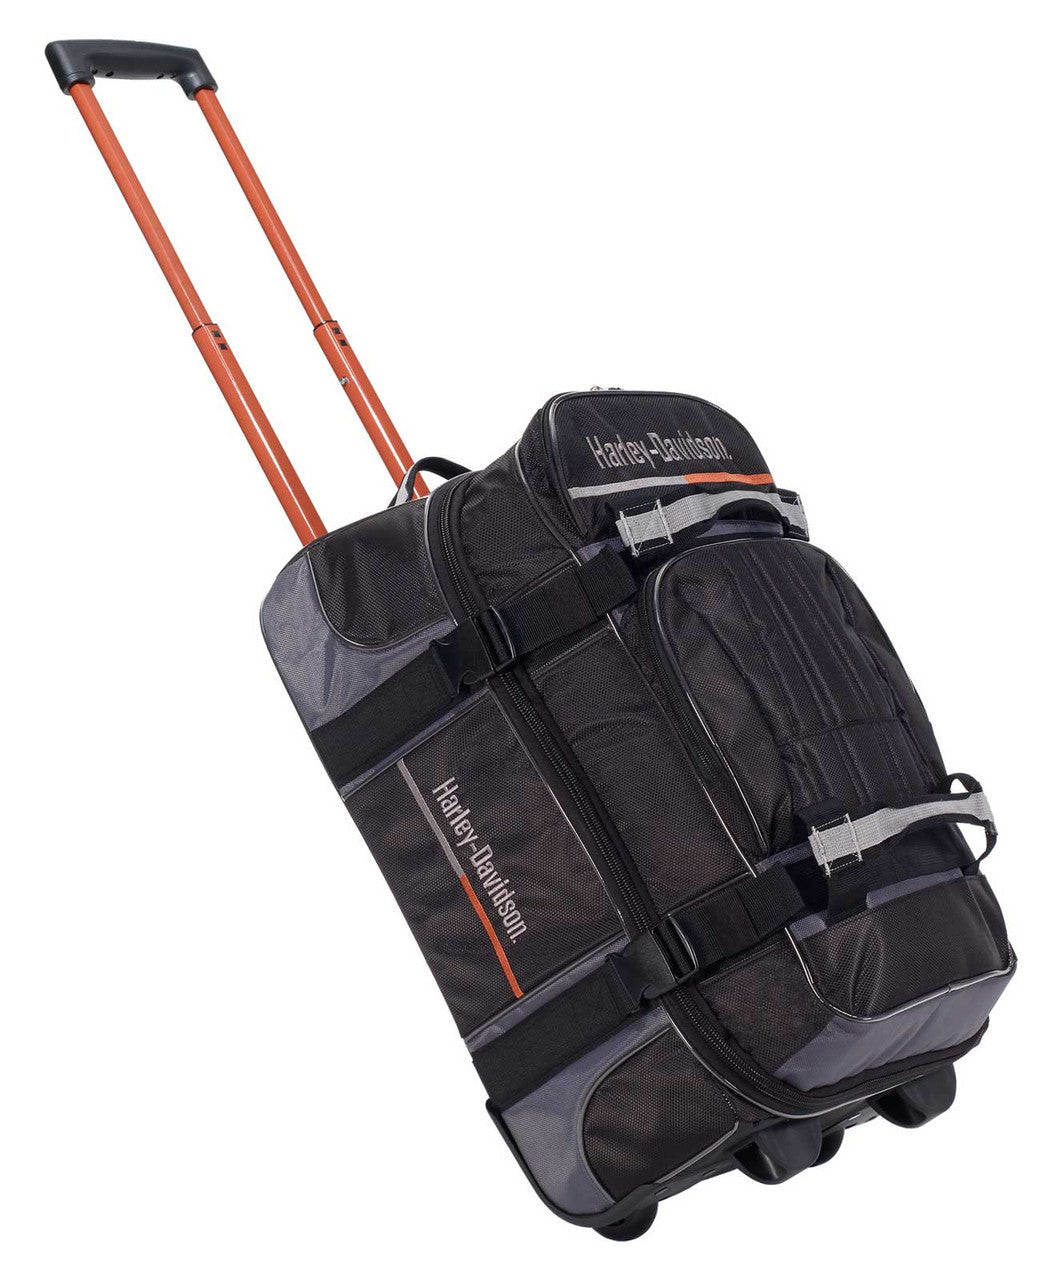 Luggage - On Tour Wheeled Duffel Bag Suitcase - Harley Davidson®